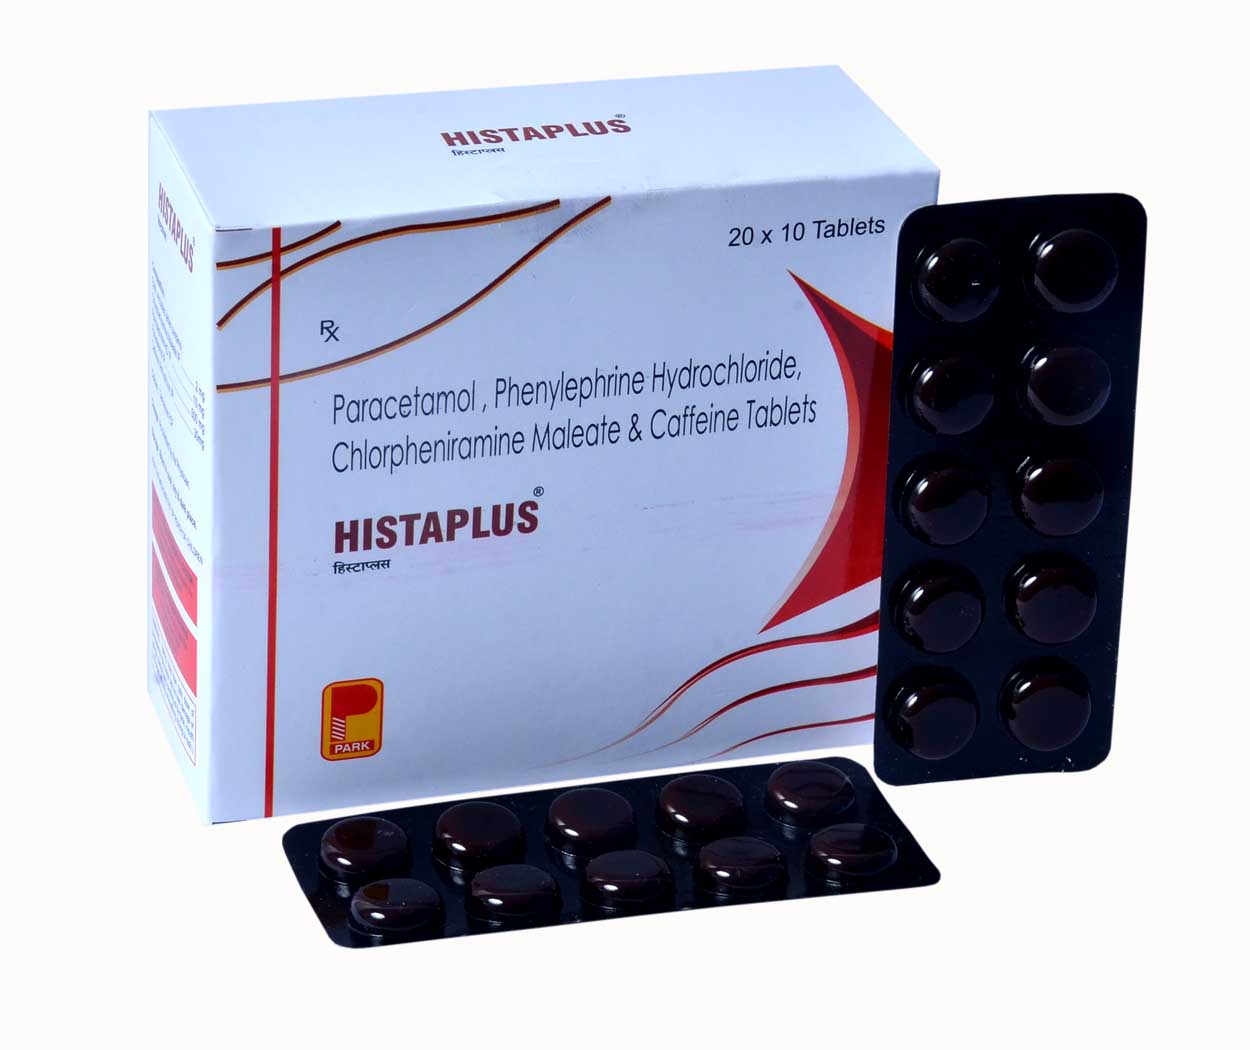 Product Name: HISTAPLUS, Compositions of HISTAPLUS are Paracetamol, Phenylephrine Hydrochloride, Chlorpheniramine Maleate & Caffeine Tablets - Park Pharmaceuticals